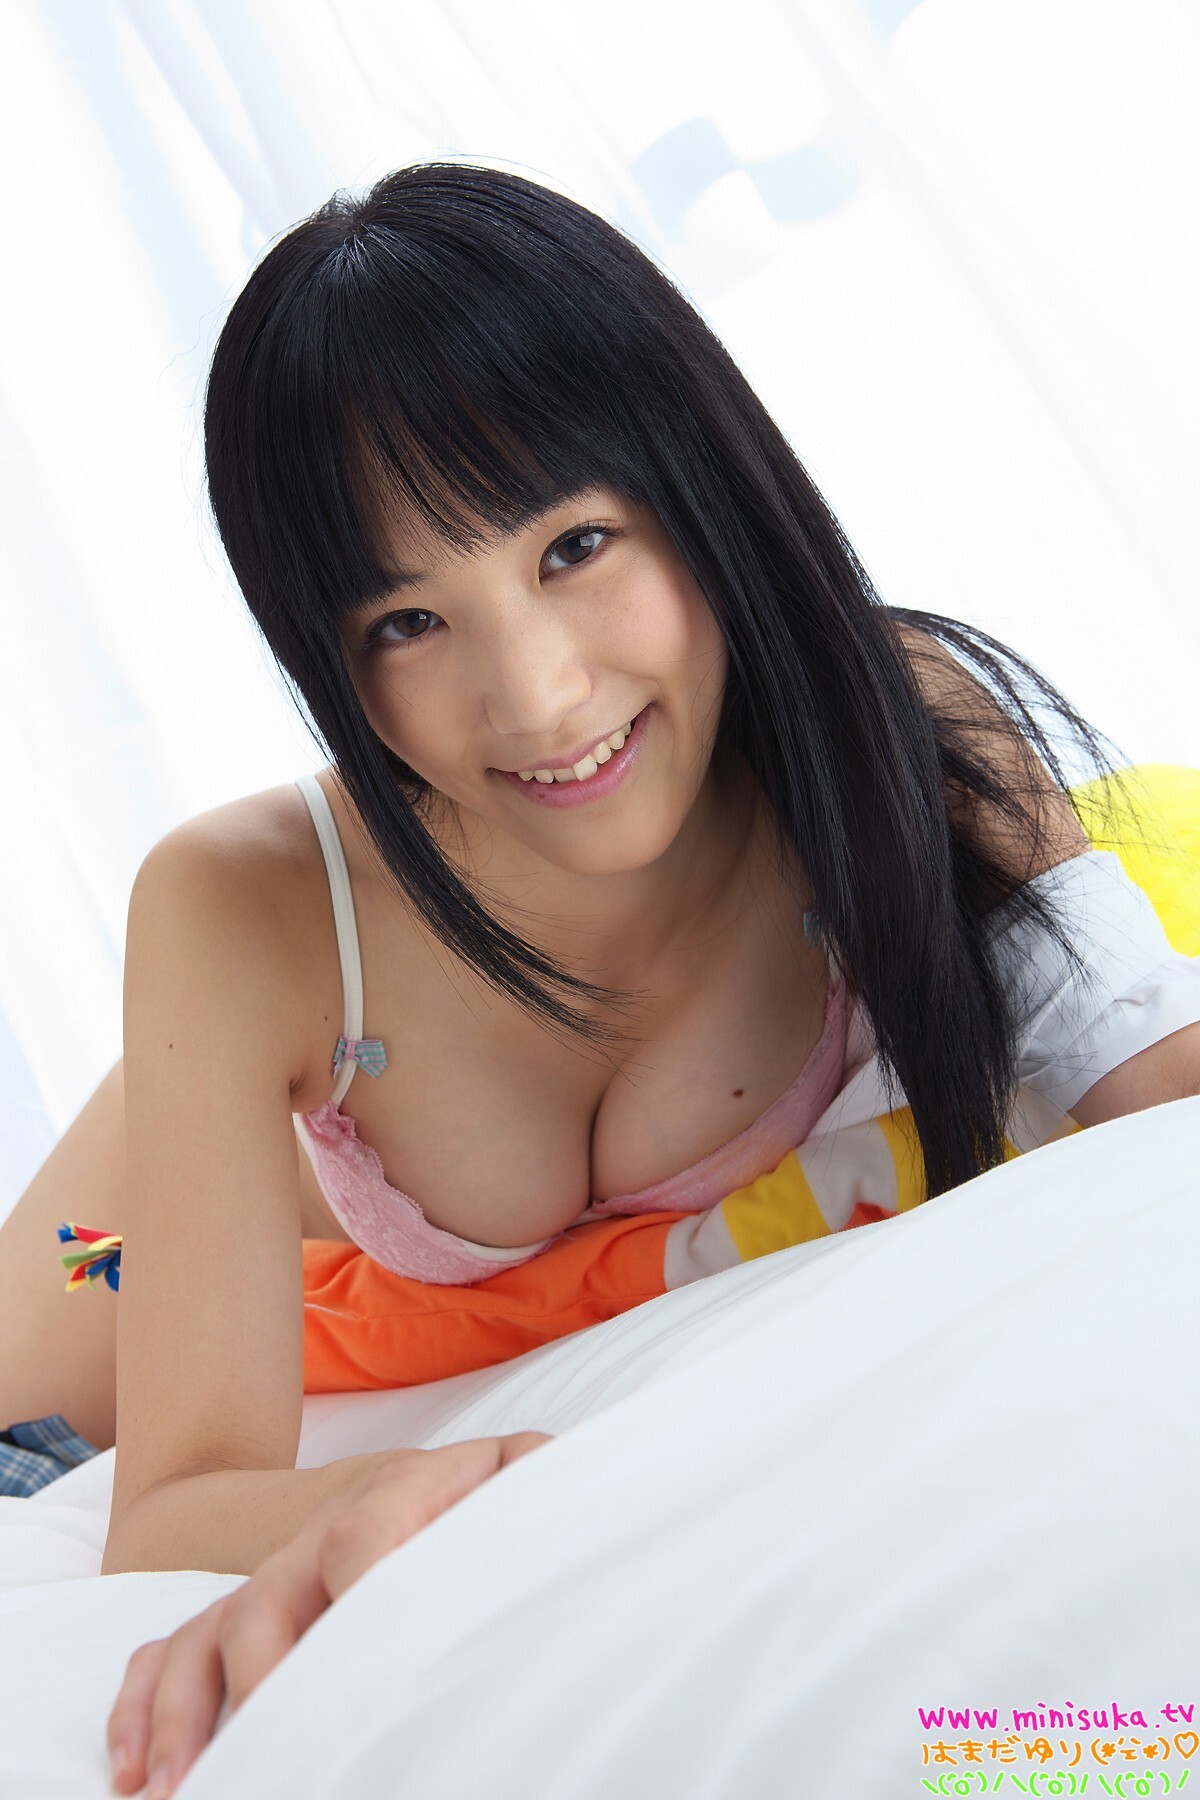 Yuri Hamada Vol.3[ Minisuka.tv ]Women in active service give birth to beautiful Japanese girls